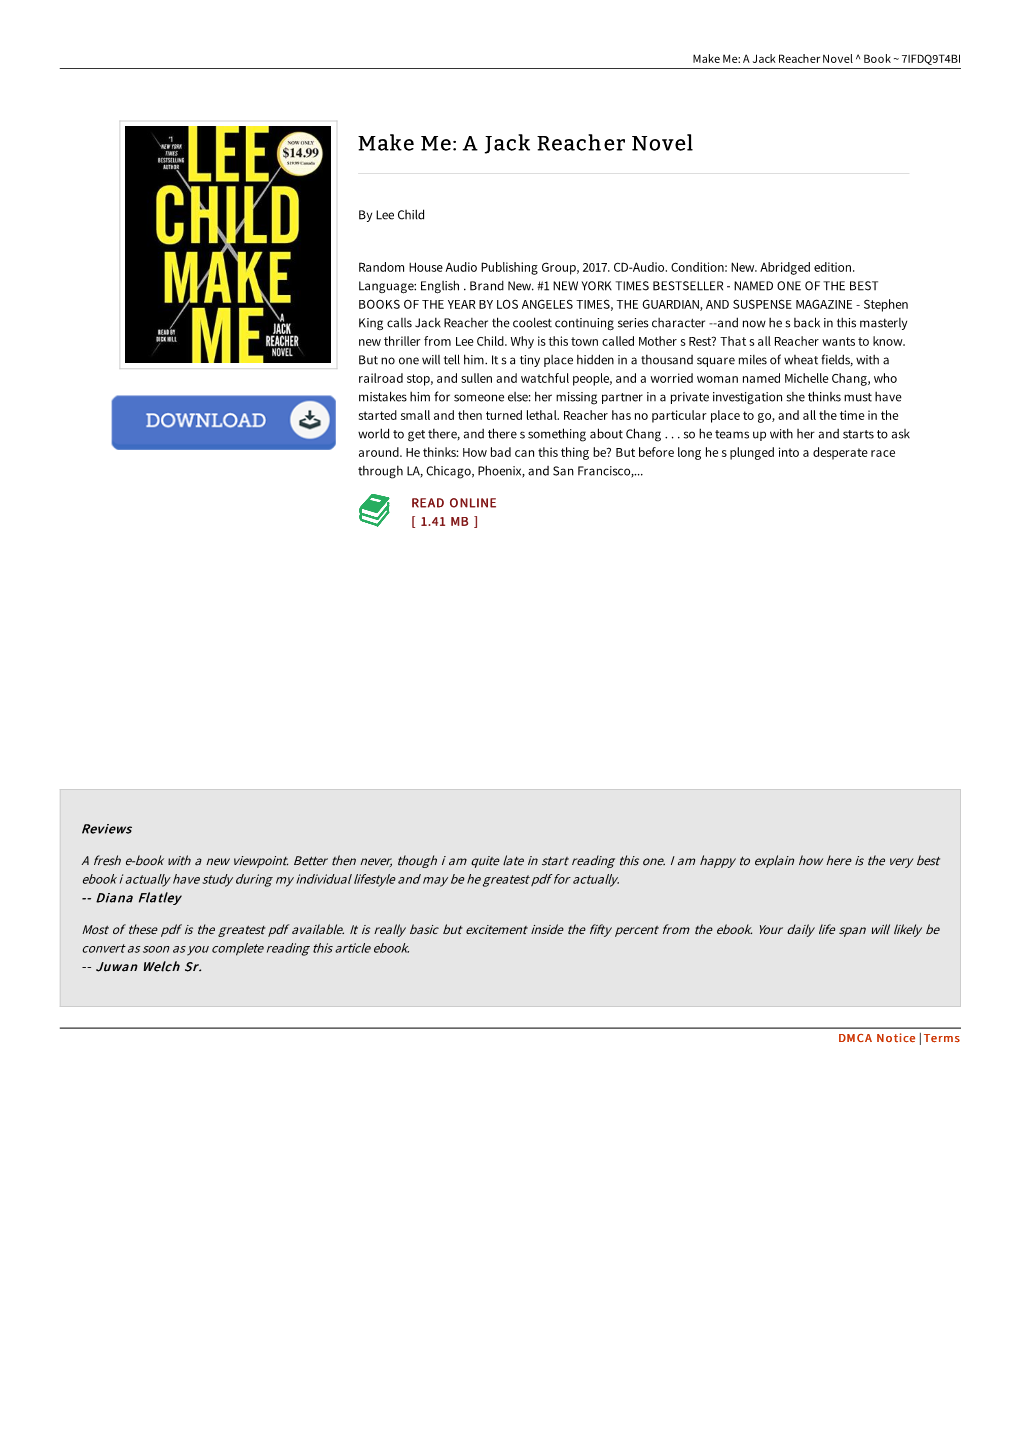 Kindle « Make Me: a Jack Reacher Novel // Read